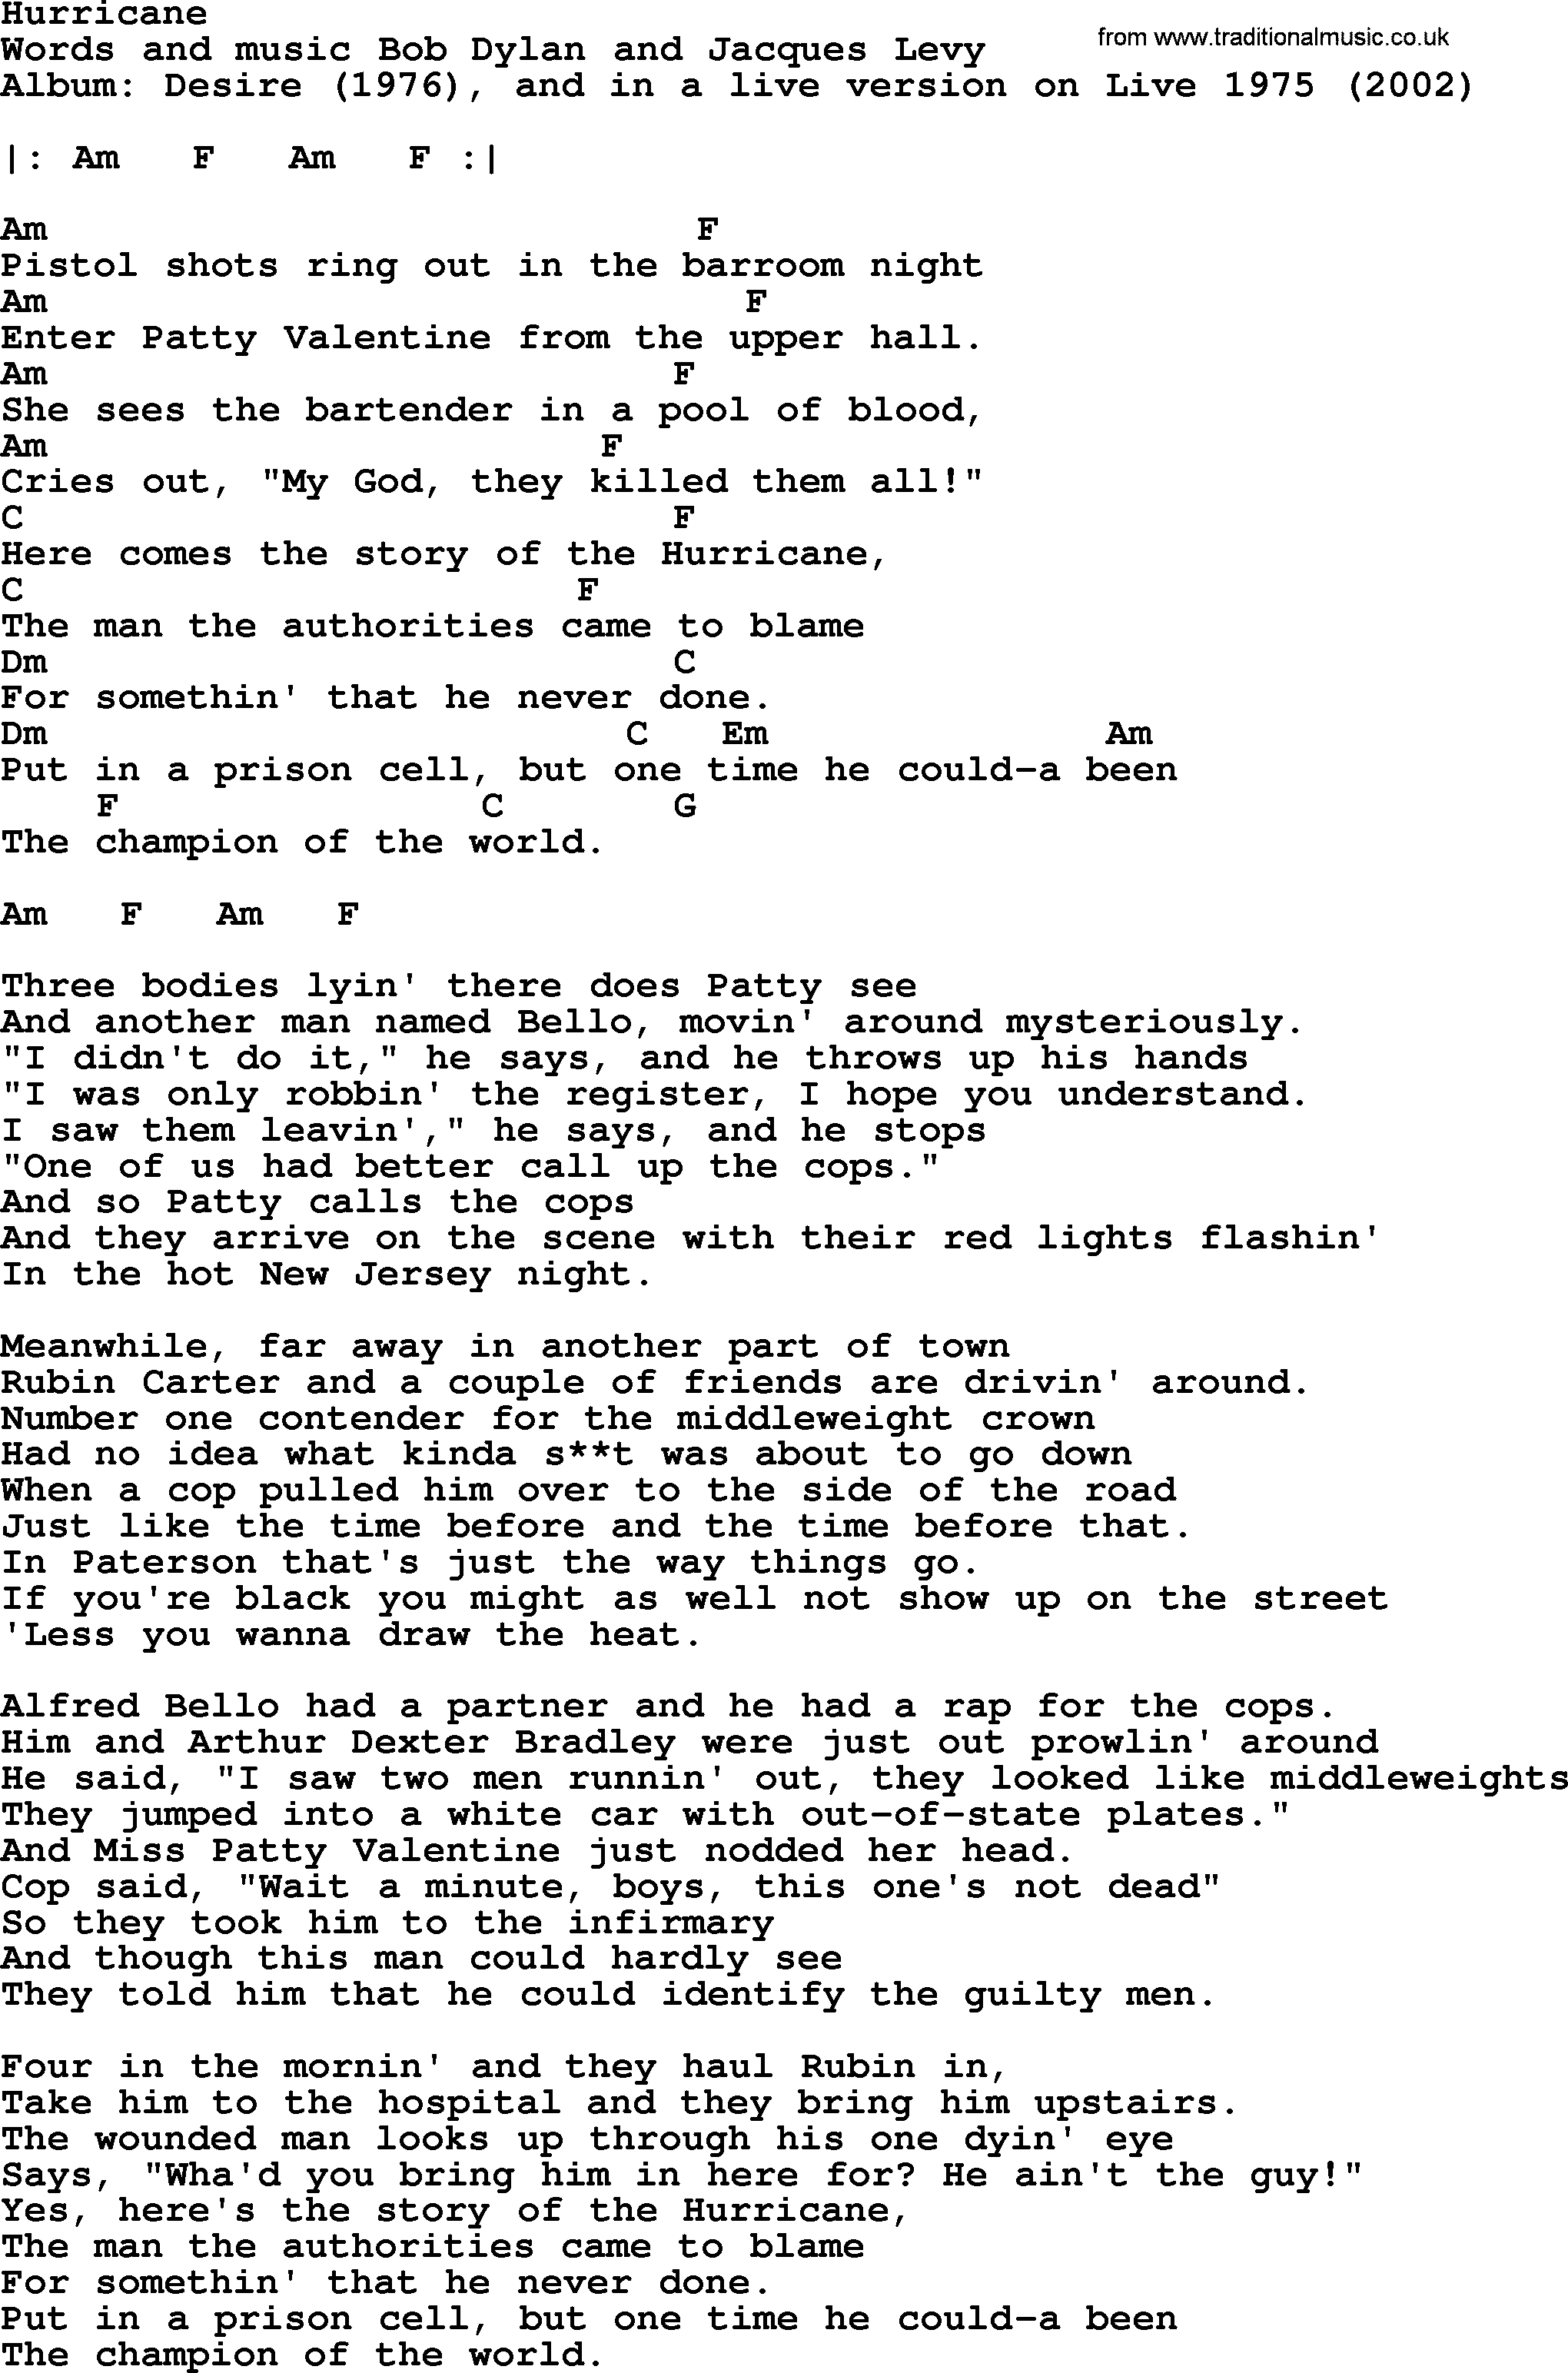 Bob Dylan song, lyrics with chords - Hurricane